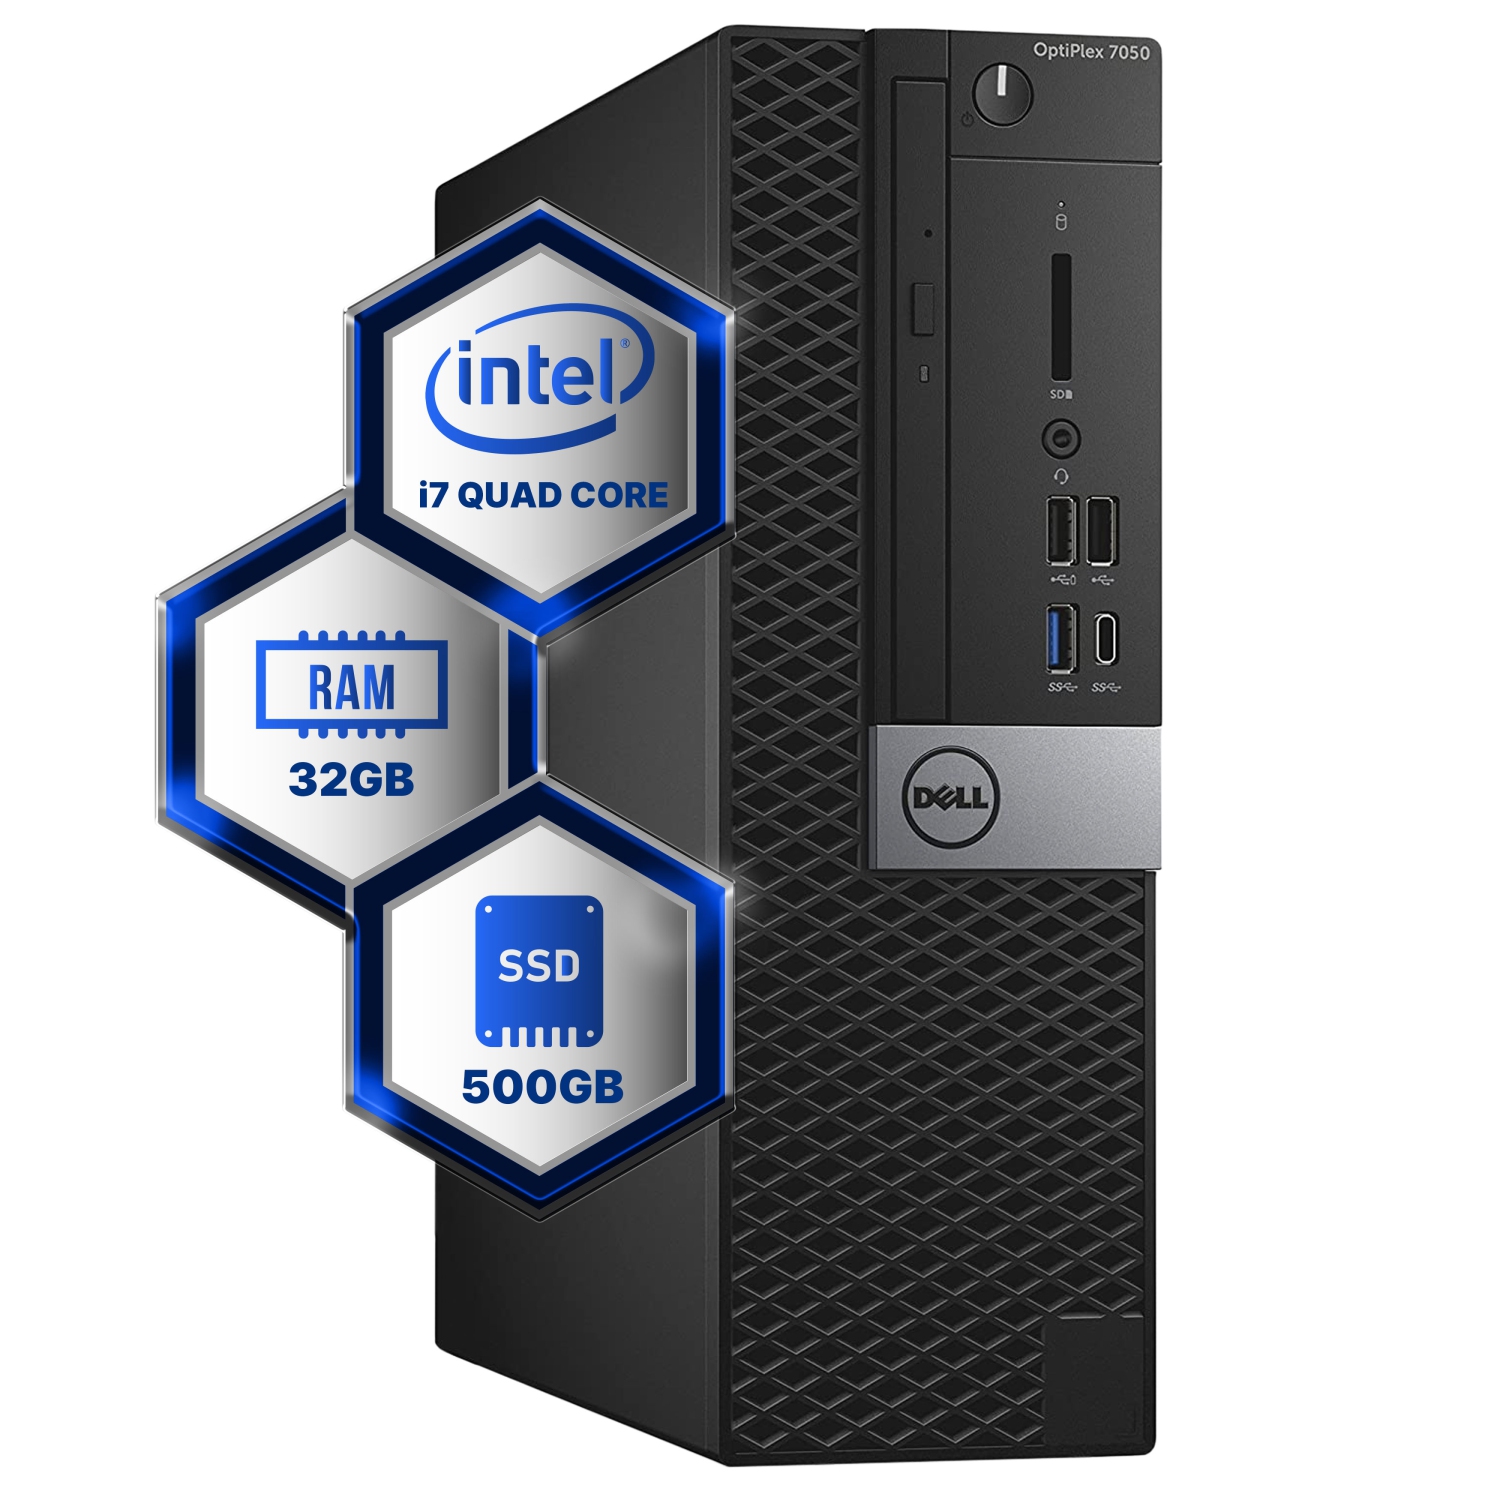 Refurbished (Good) - Dell Optiplex 7050 Desktop Computer | Quad Core Intel i7 (3.4) | 32GB DDR4 RAM | 500GB SSD Solid State | Windows 10 Professional | Home or Office PC